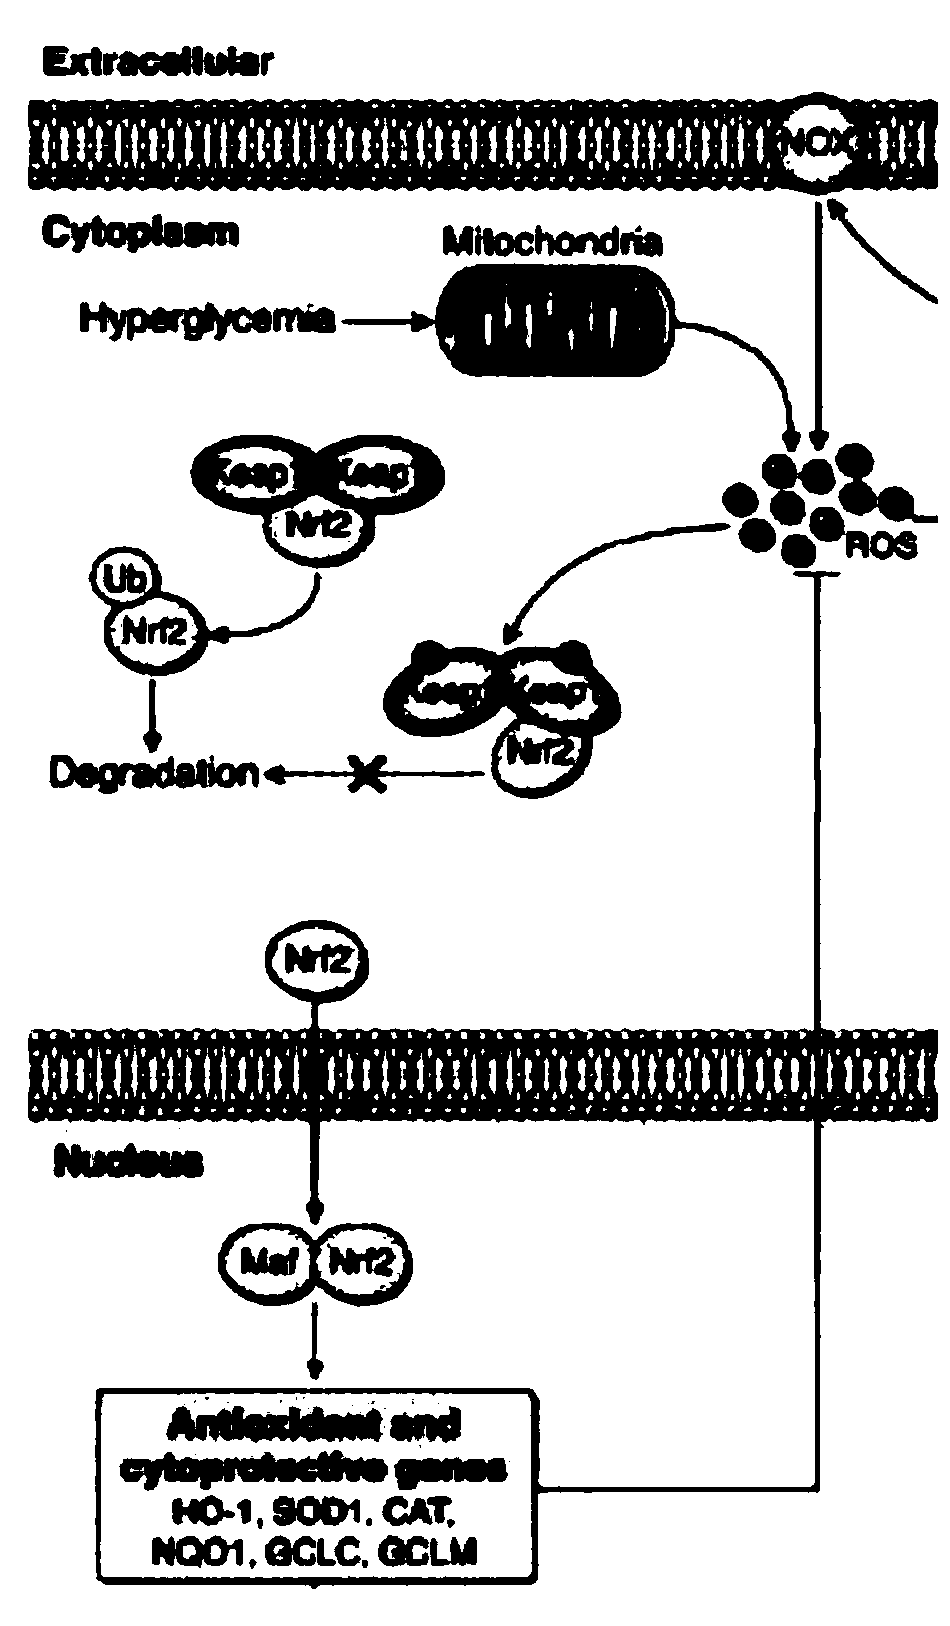 Application of NRF2 protein in preparation of drug for regulating biorhythm